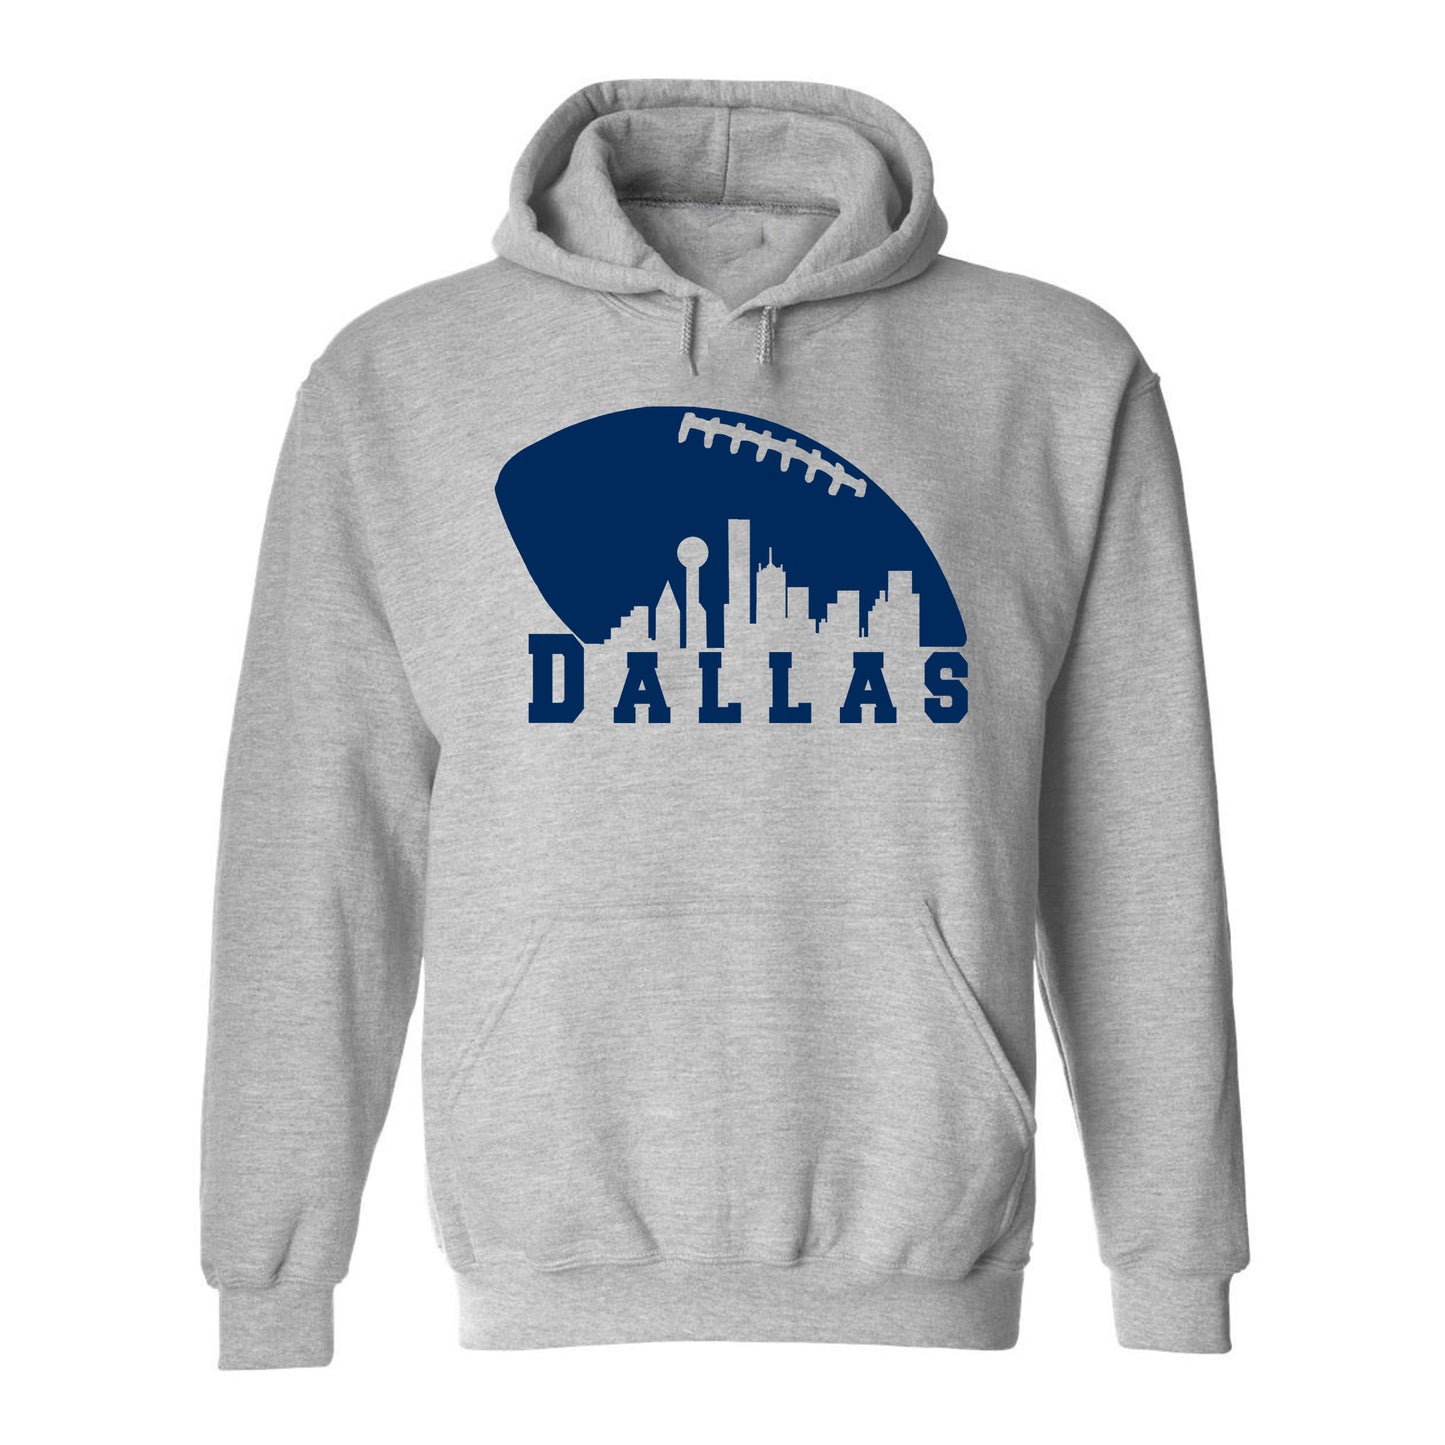 Dallas Football City Skyline Apparel for Football Fans (S-3XL)